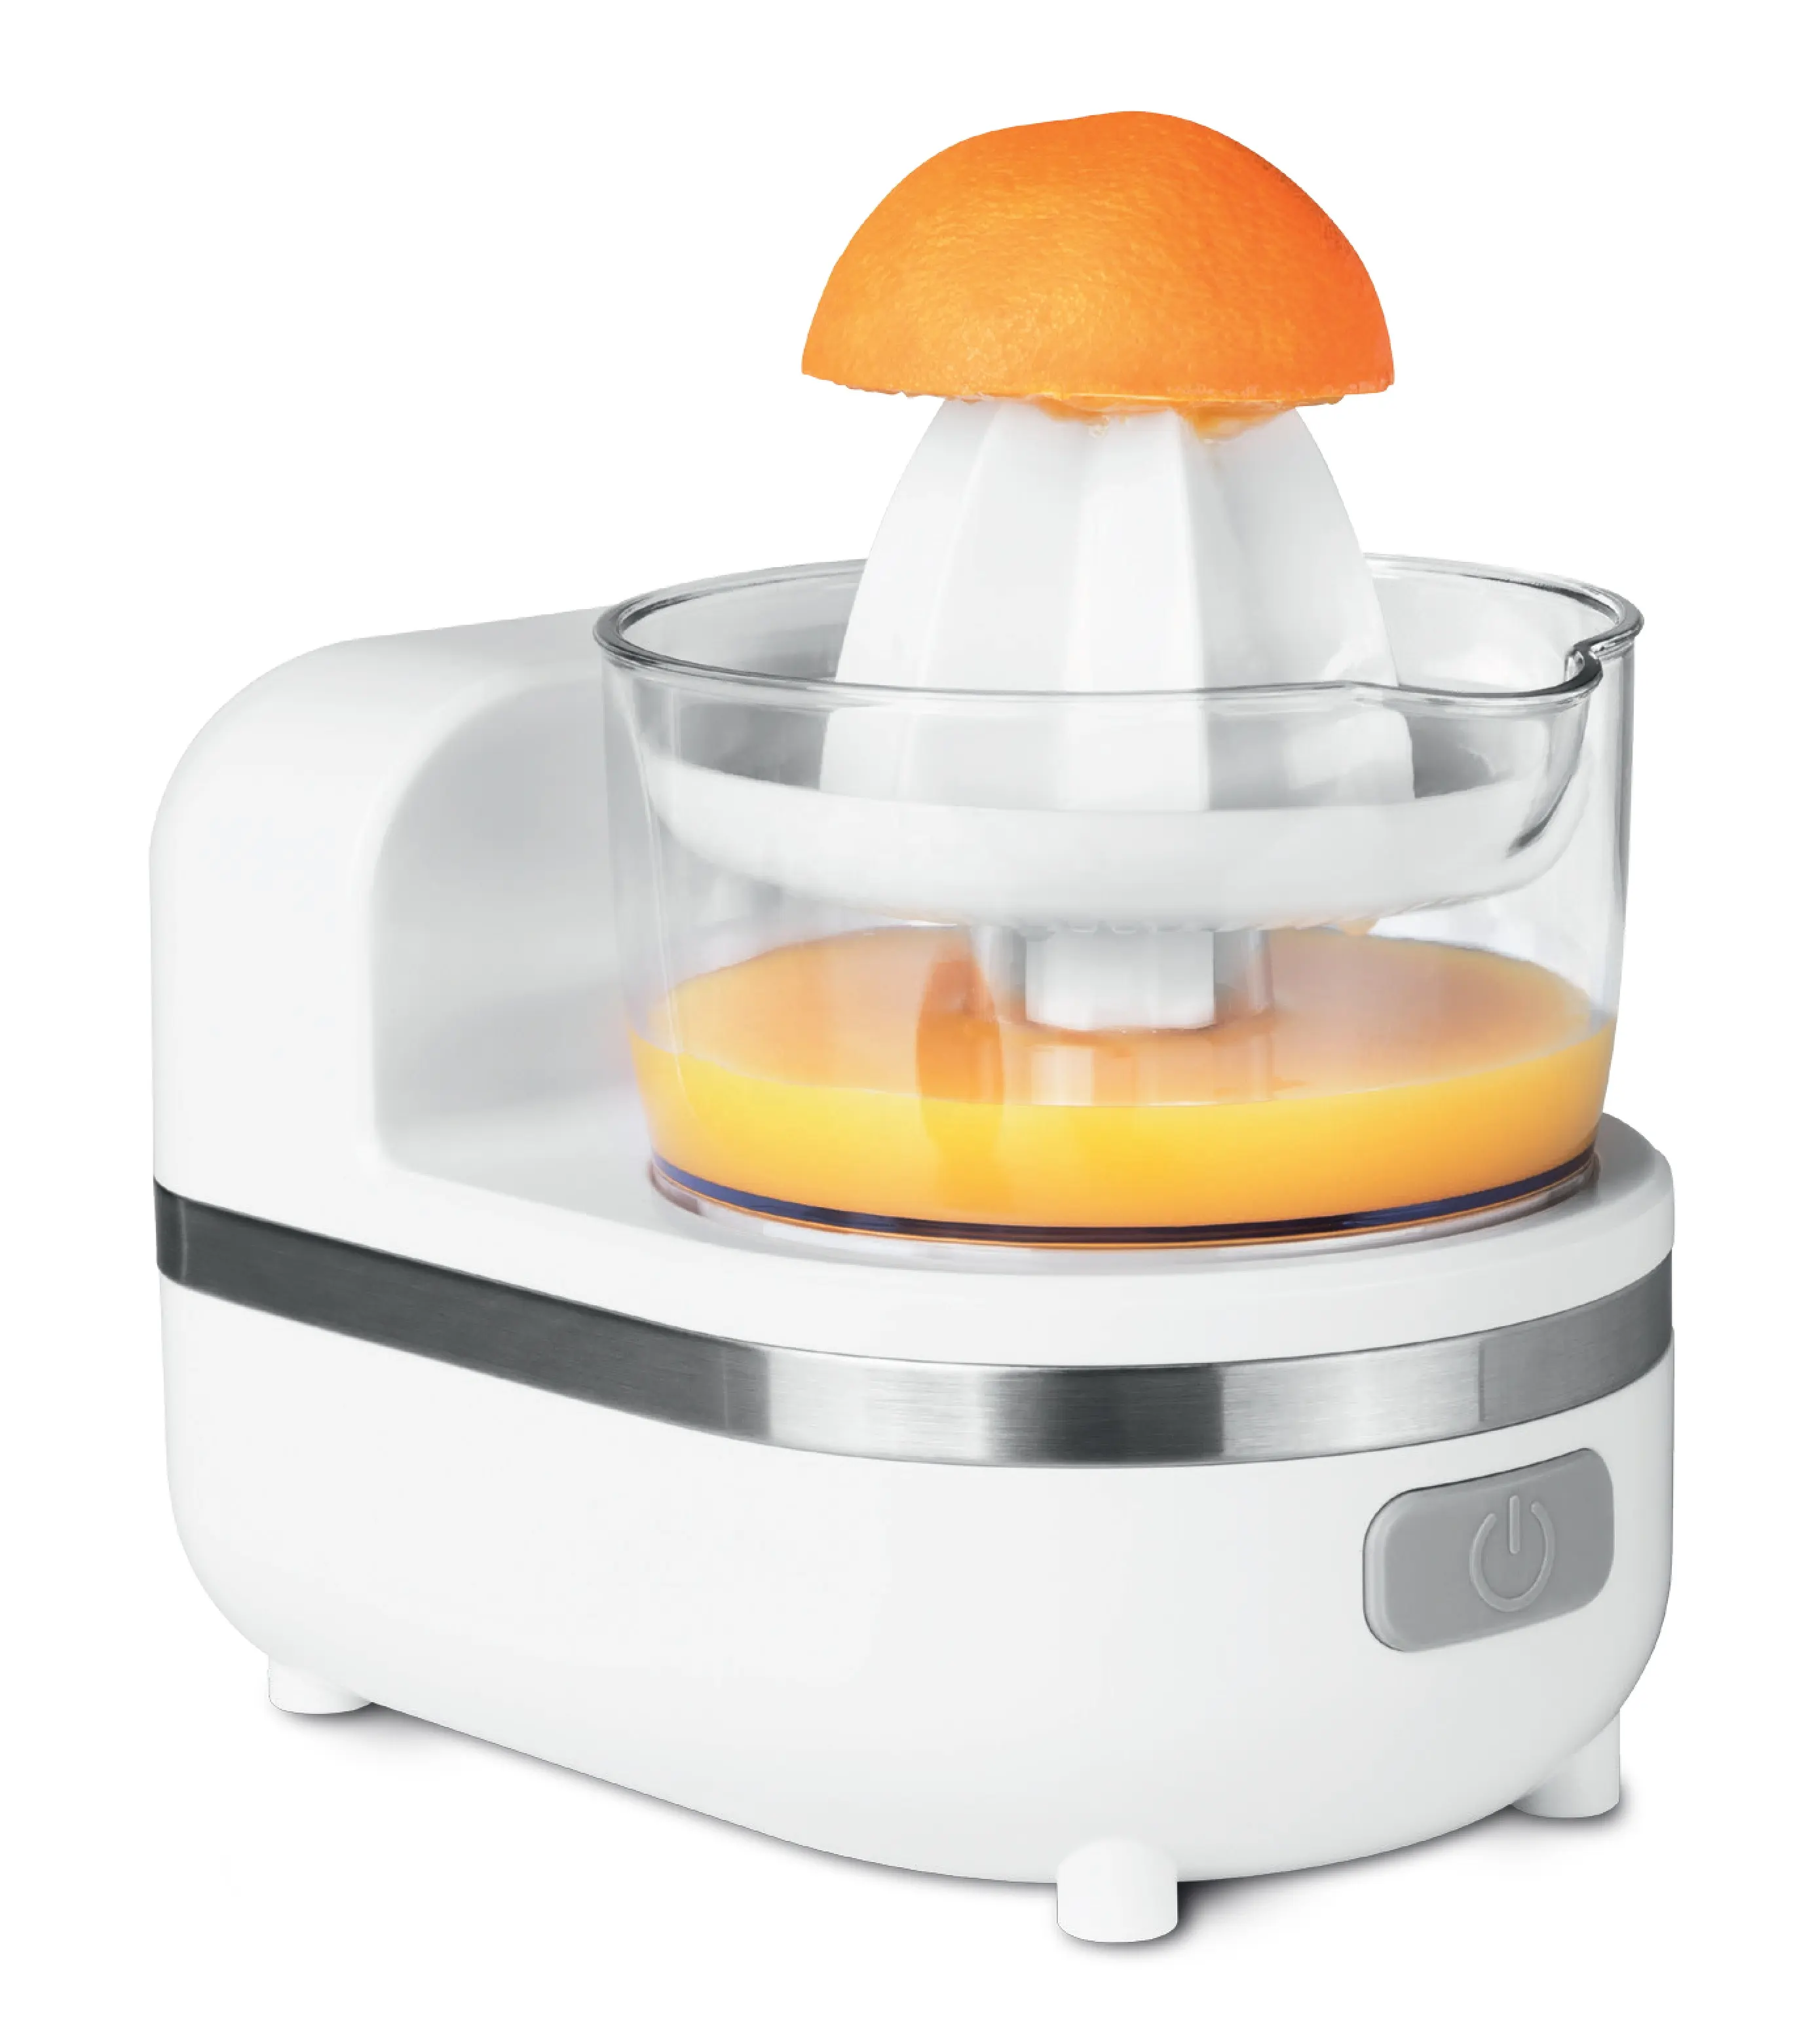 Peichen fruit ice cream machine maker for household Vegetable cutter Citrus juicer maker 3 in 1 multifunction food processor